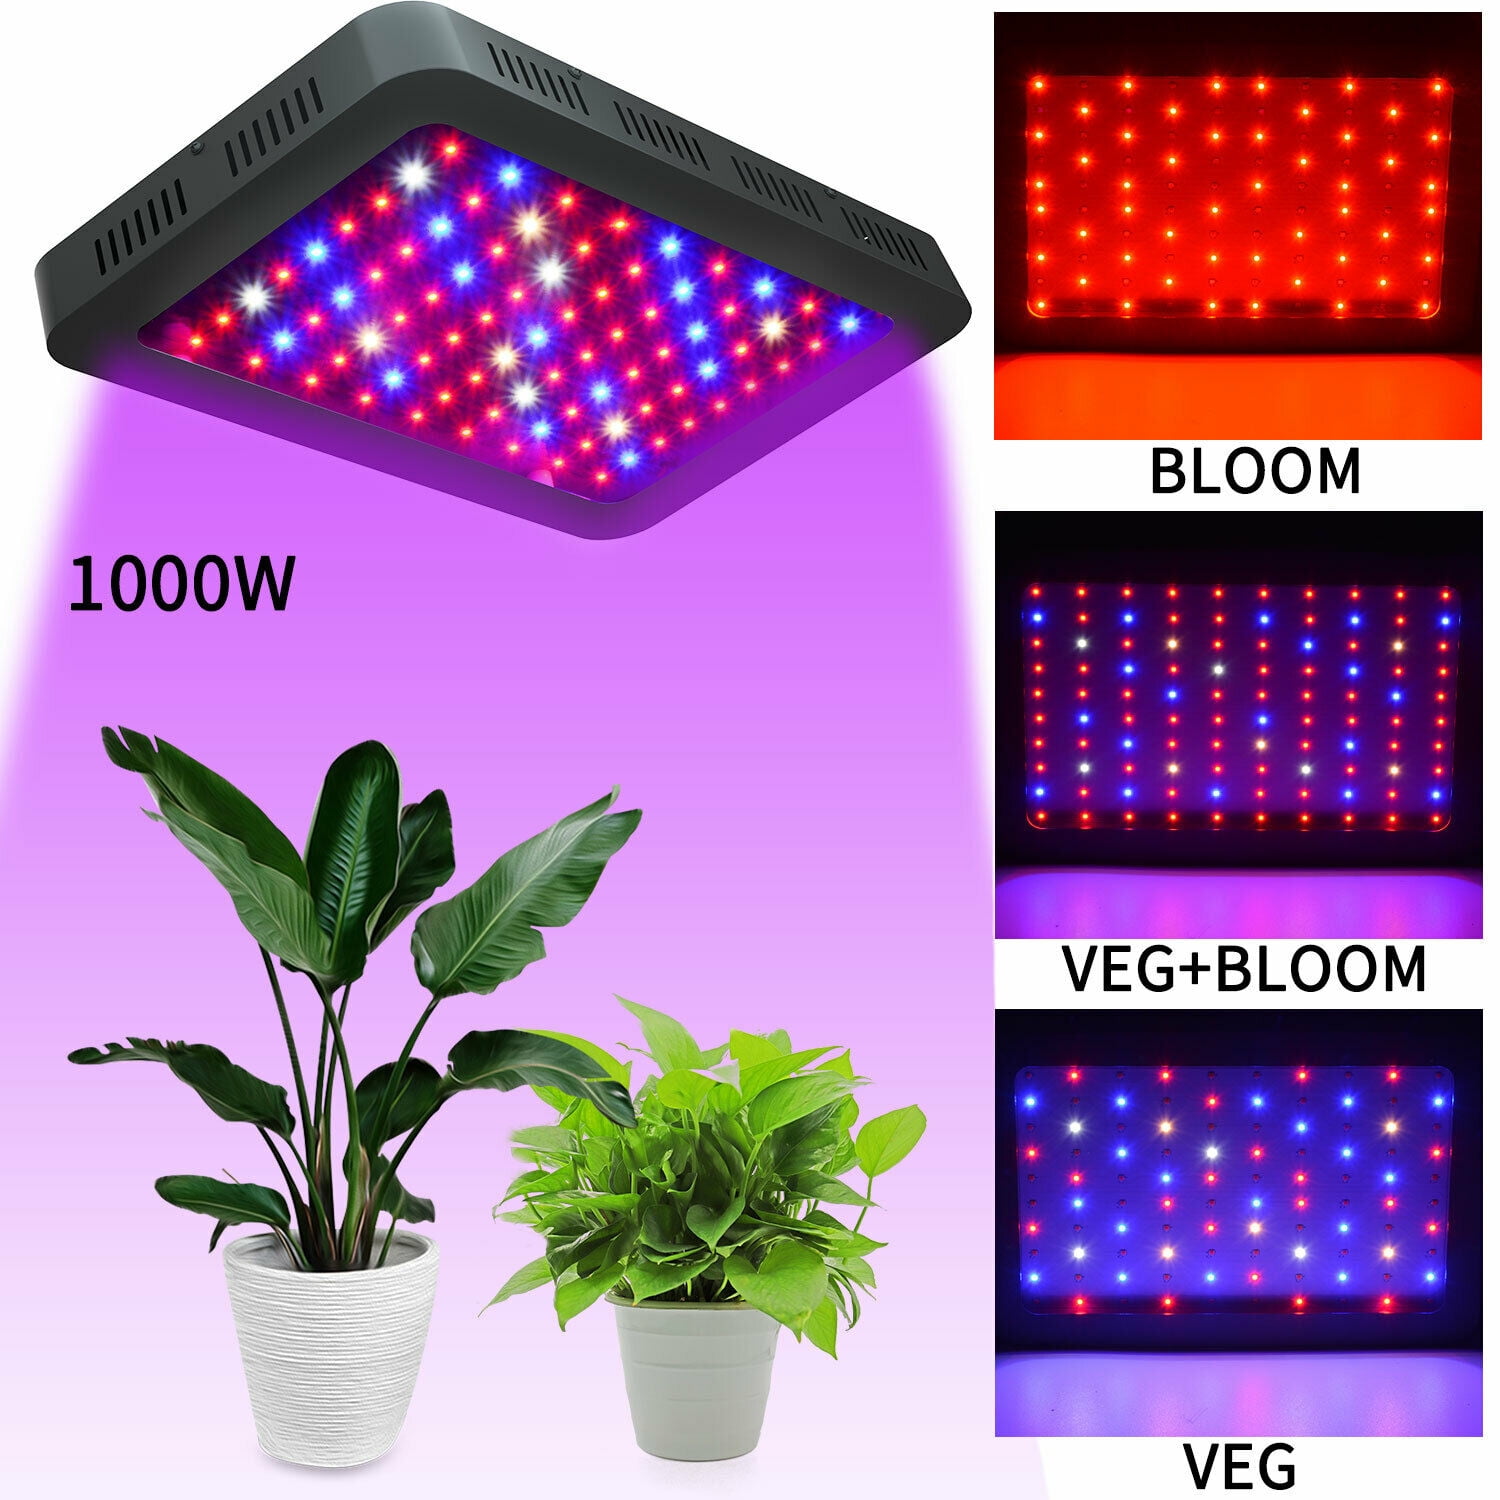 1000W Full Spectrum Led Plant Grow Light Veg Bloom Lamp Indoor Serra Garden con interruttore per giardinaggio Spina UE Led Grow Light serra balcone familiare